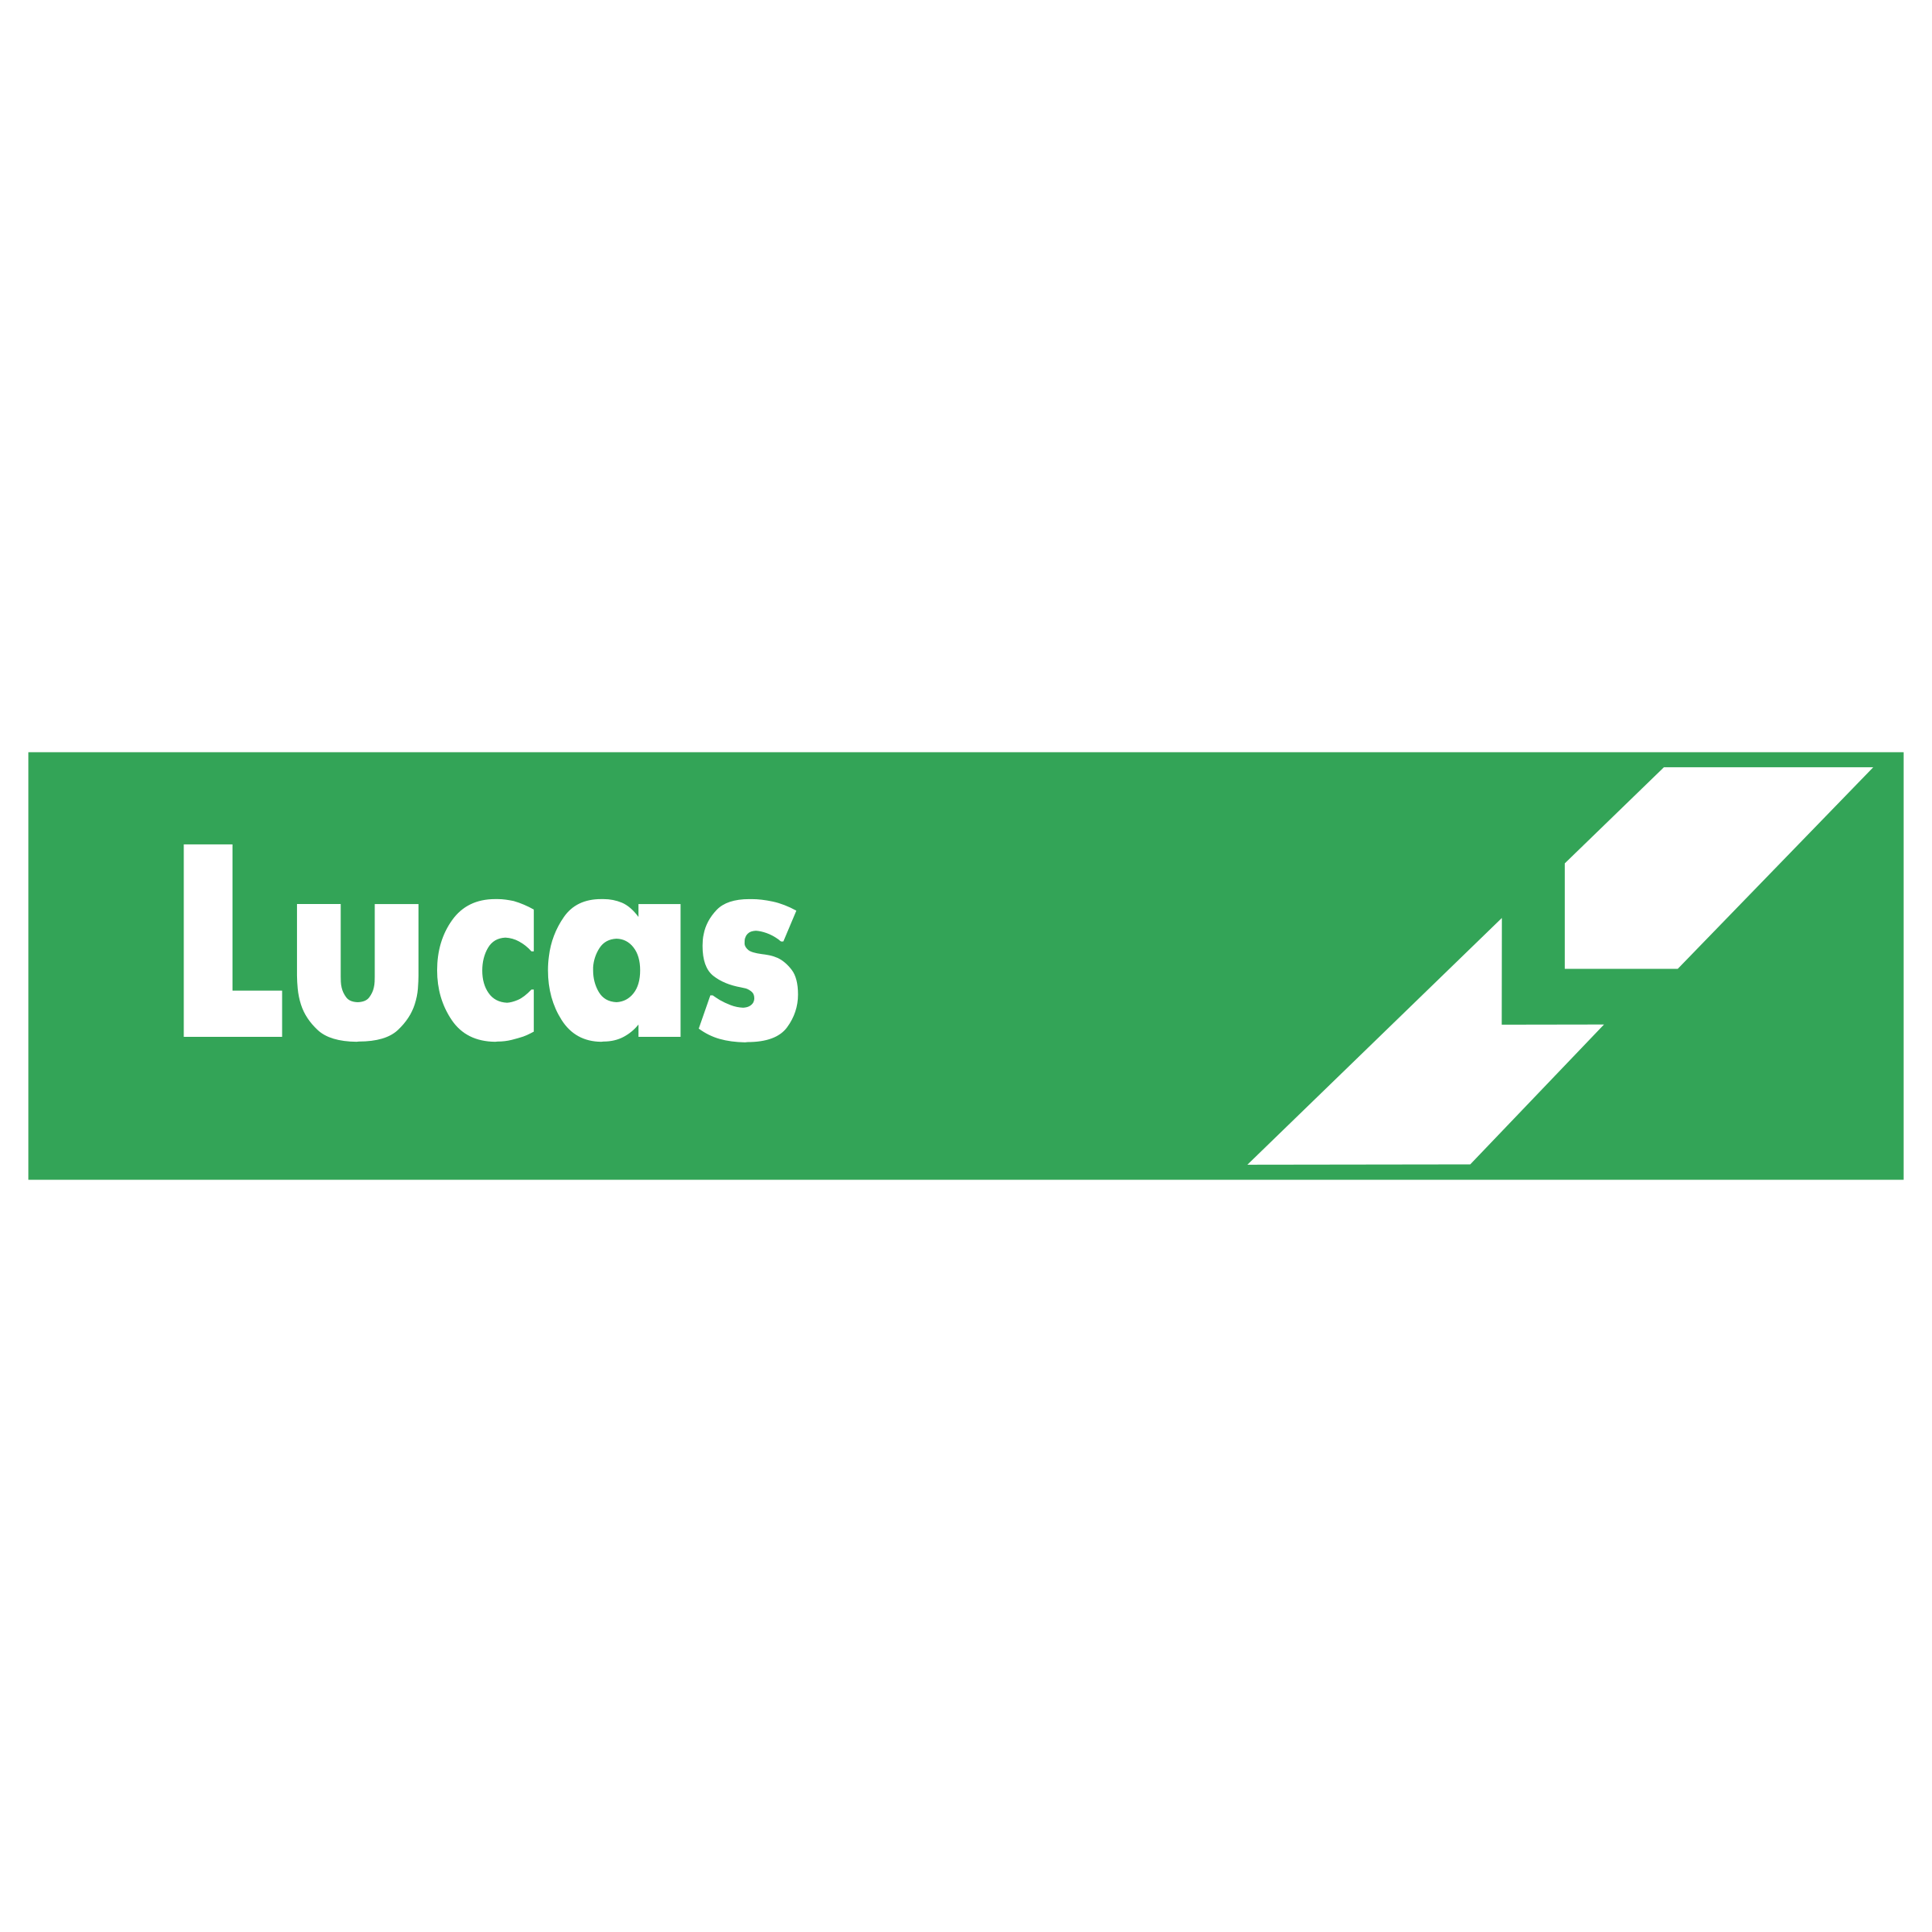 Lucas Logo - Lucas Logo PNG Transparent & SVG Vector - Freebie Supply